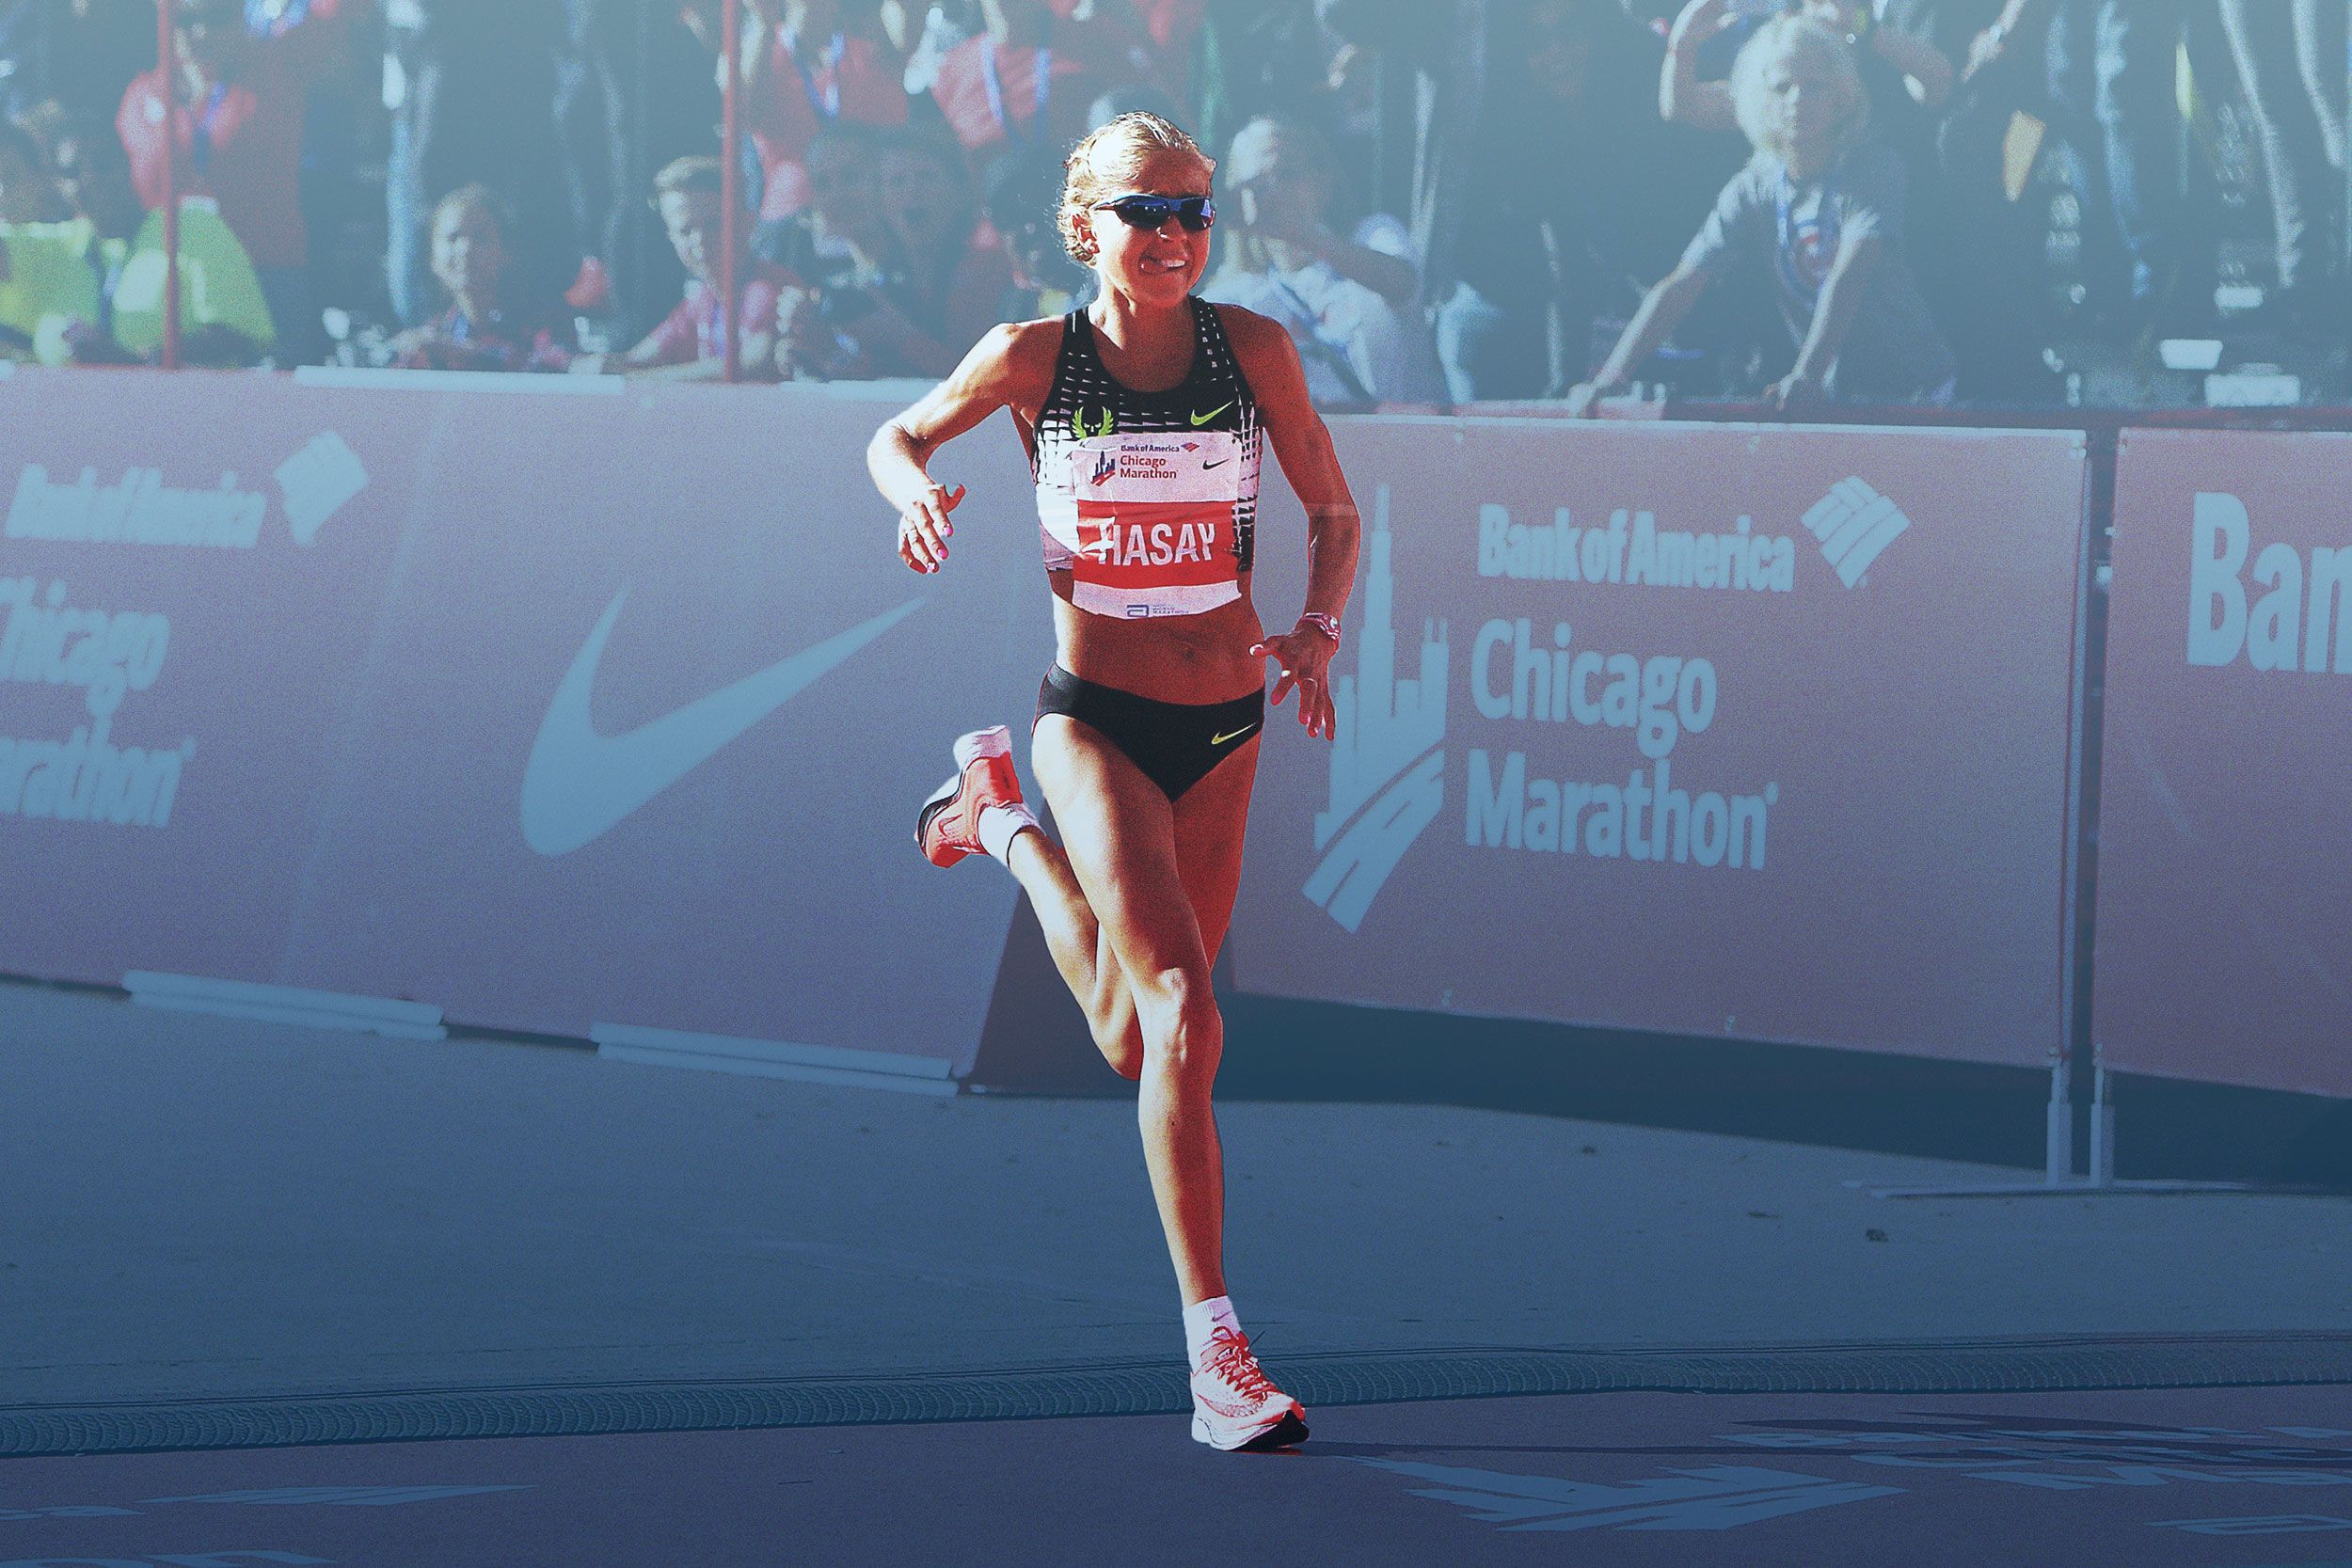 Blive gift mental atlet Jordan Hasay Running 2019 Boston Marathon | Return to Running